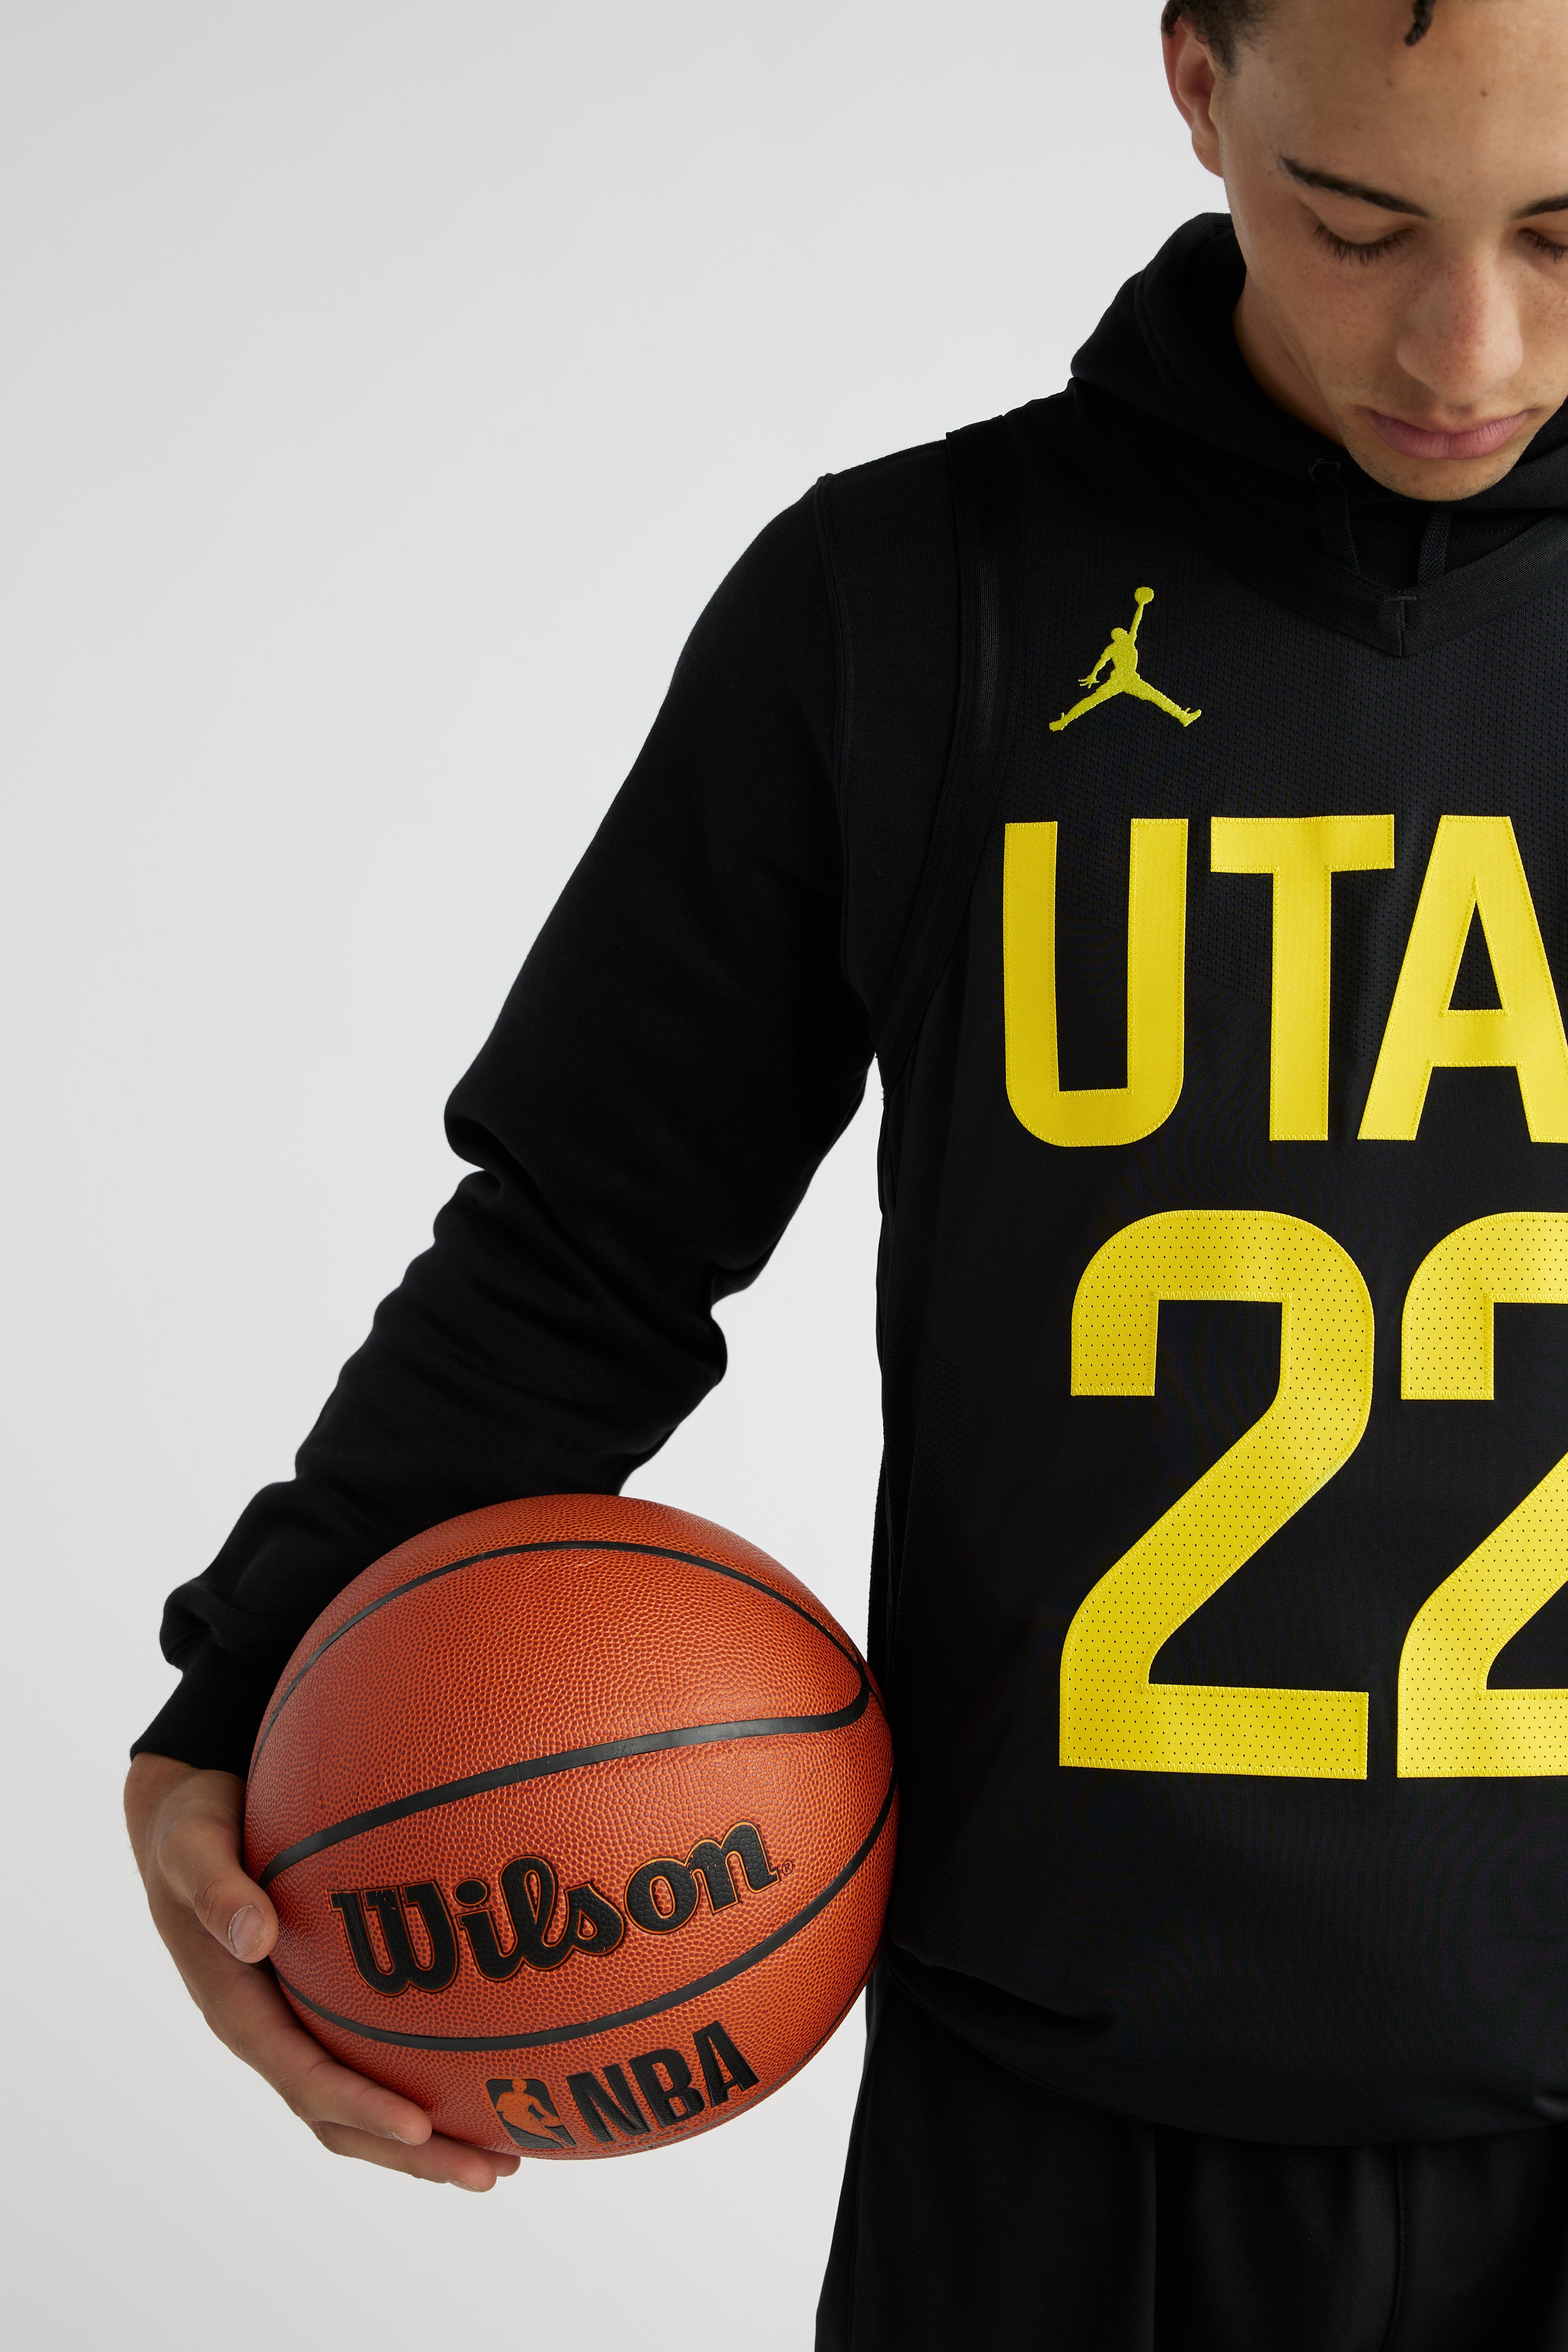 Utah Jazz Team Store on X: That number 20 looks pretty good on